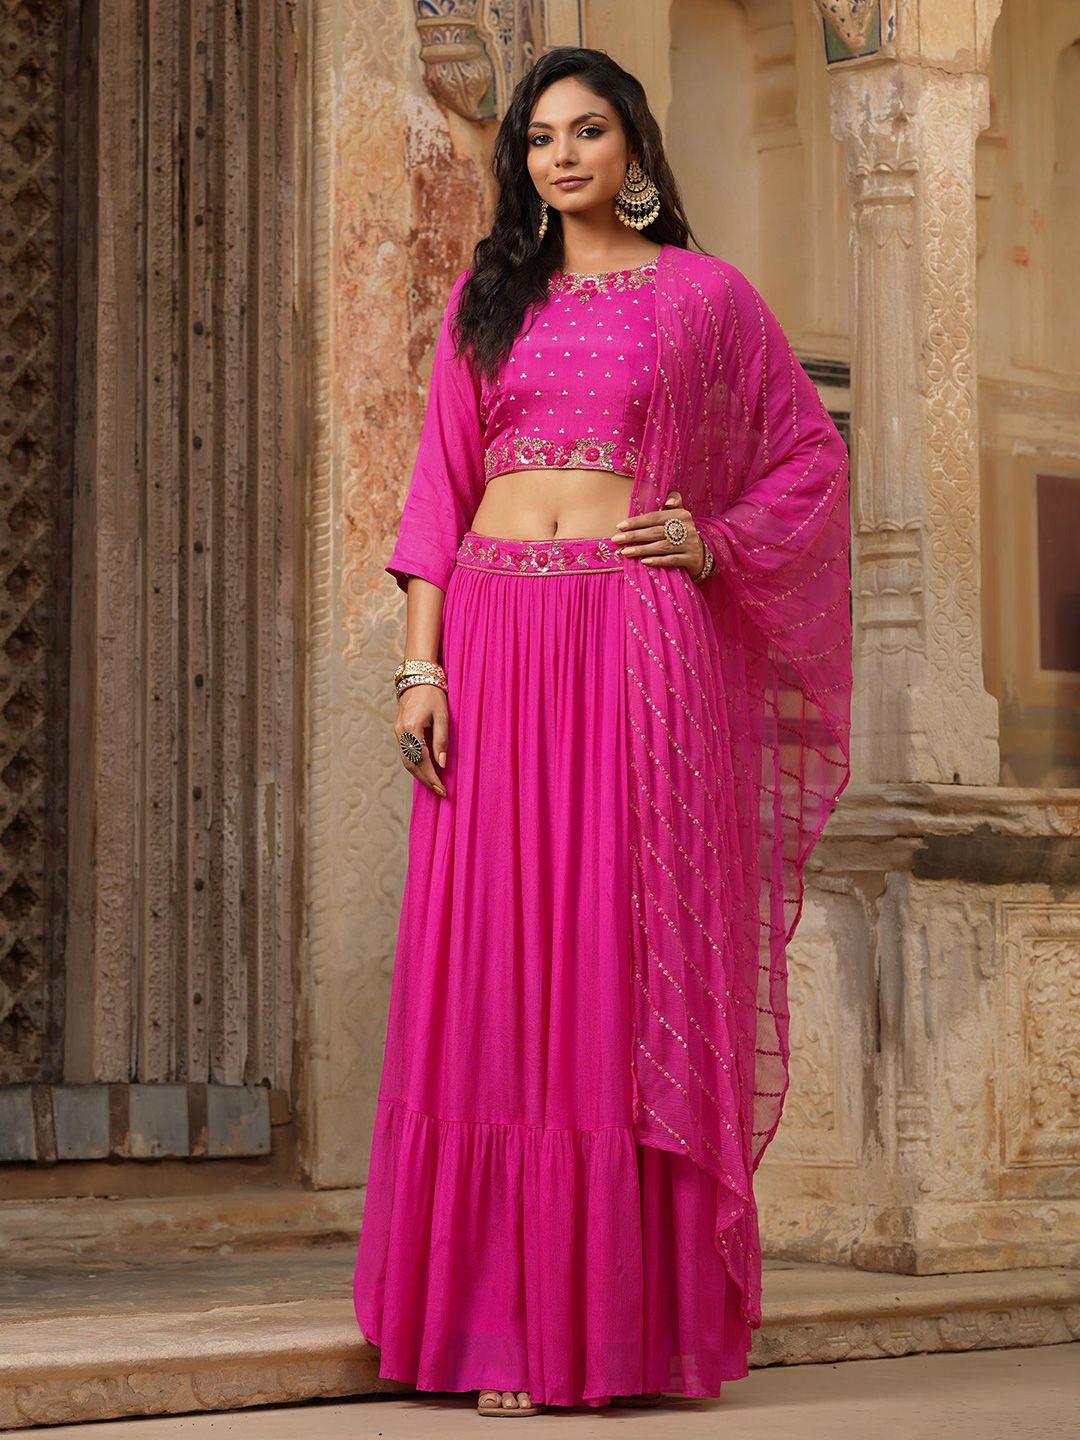 scakhi women pink & gold-toned embellished ready to wear lehenga & blouse with dupatta